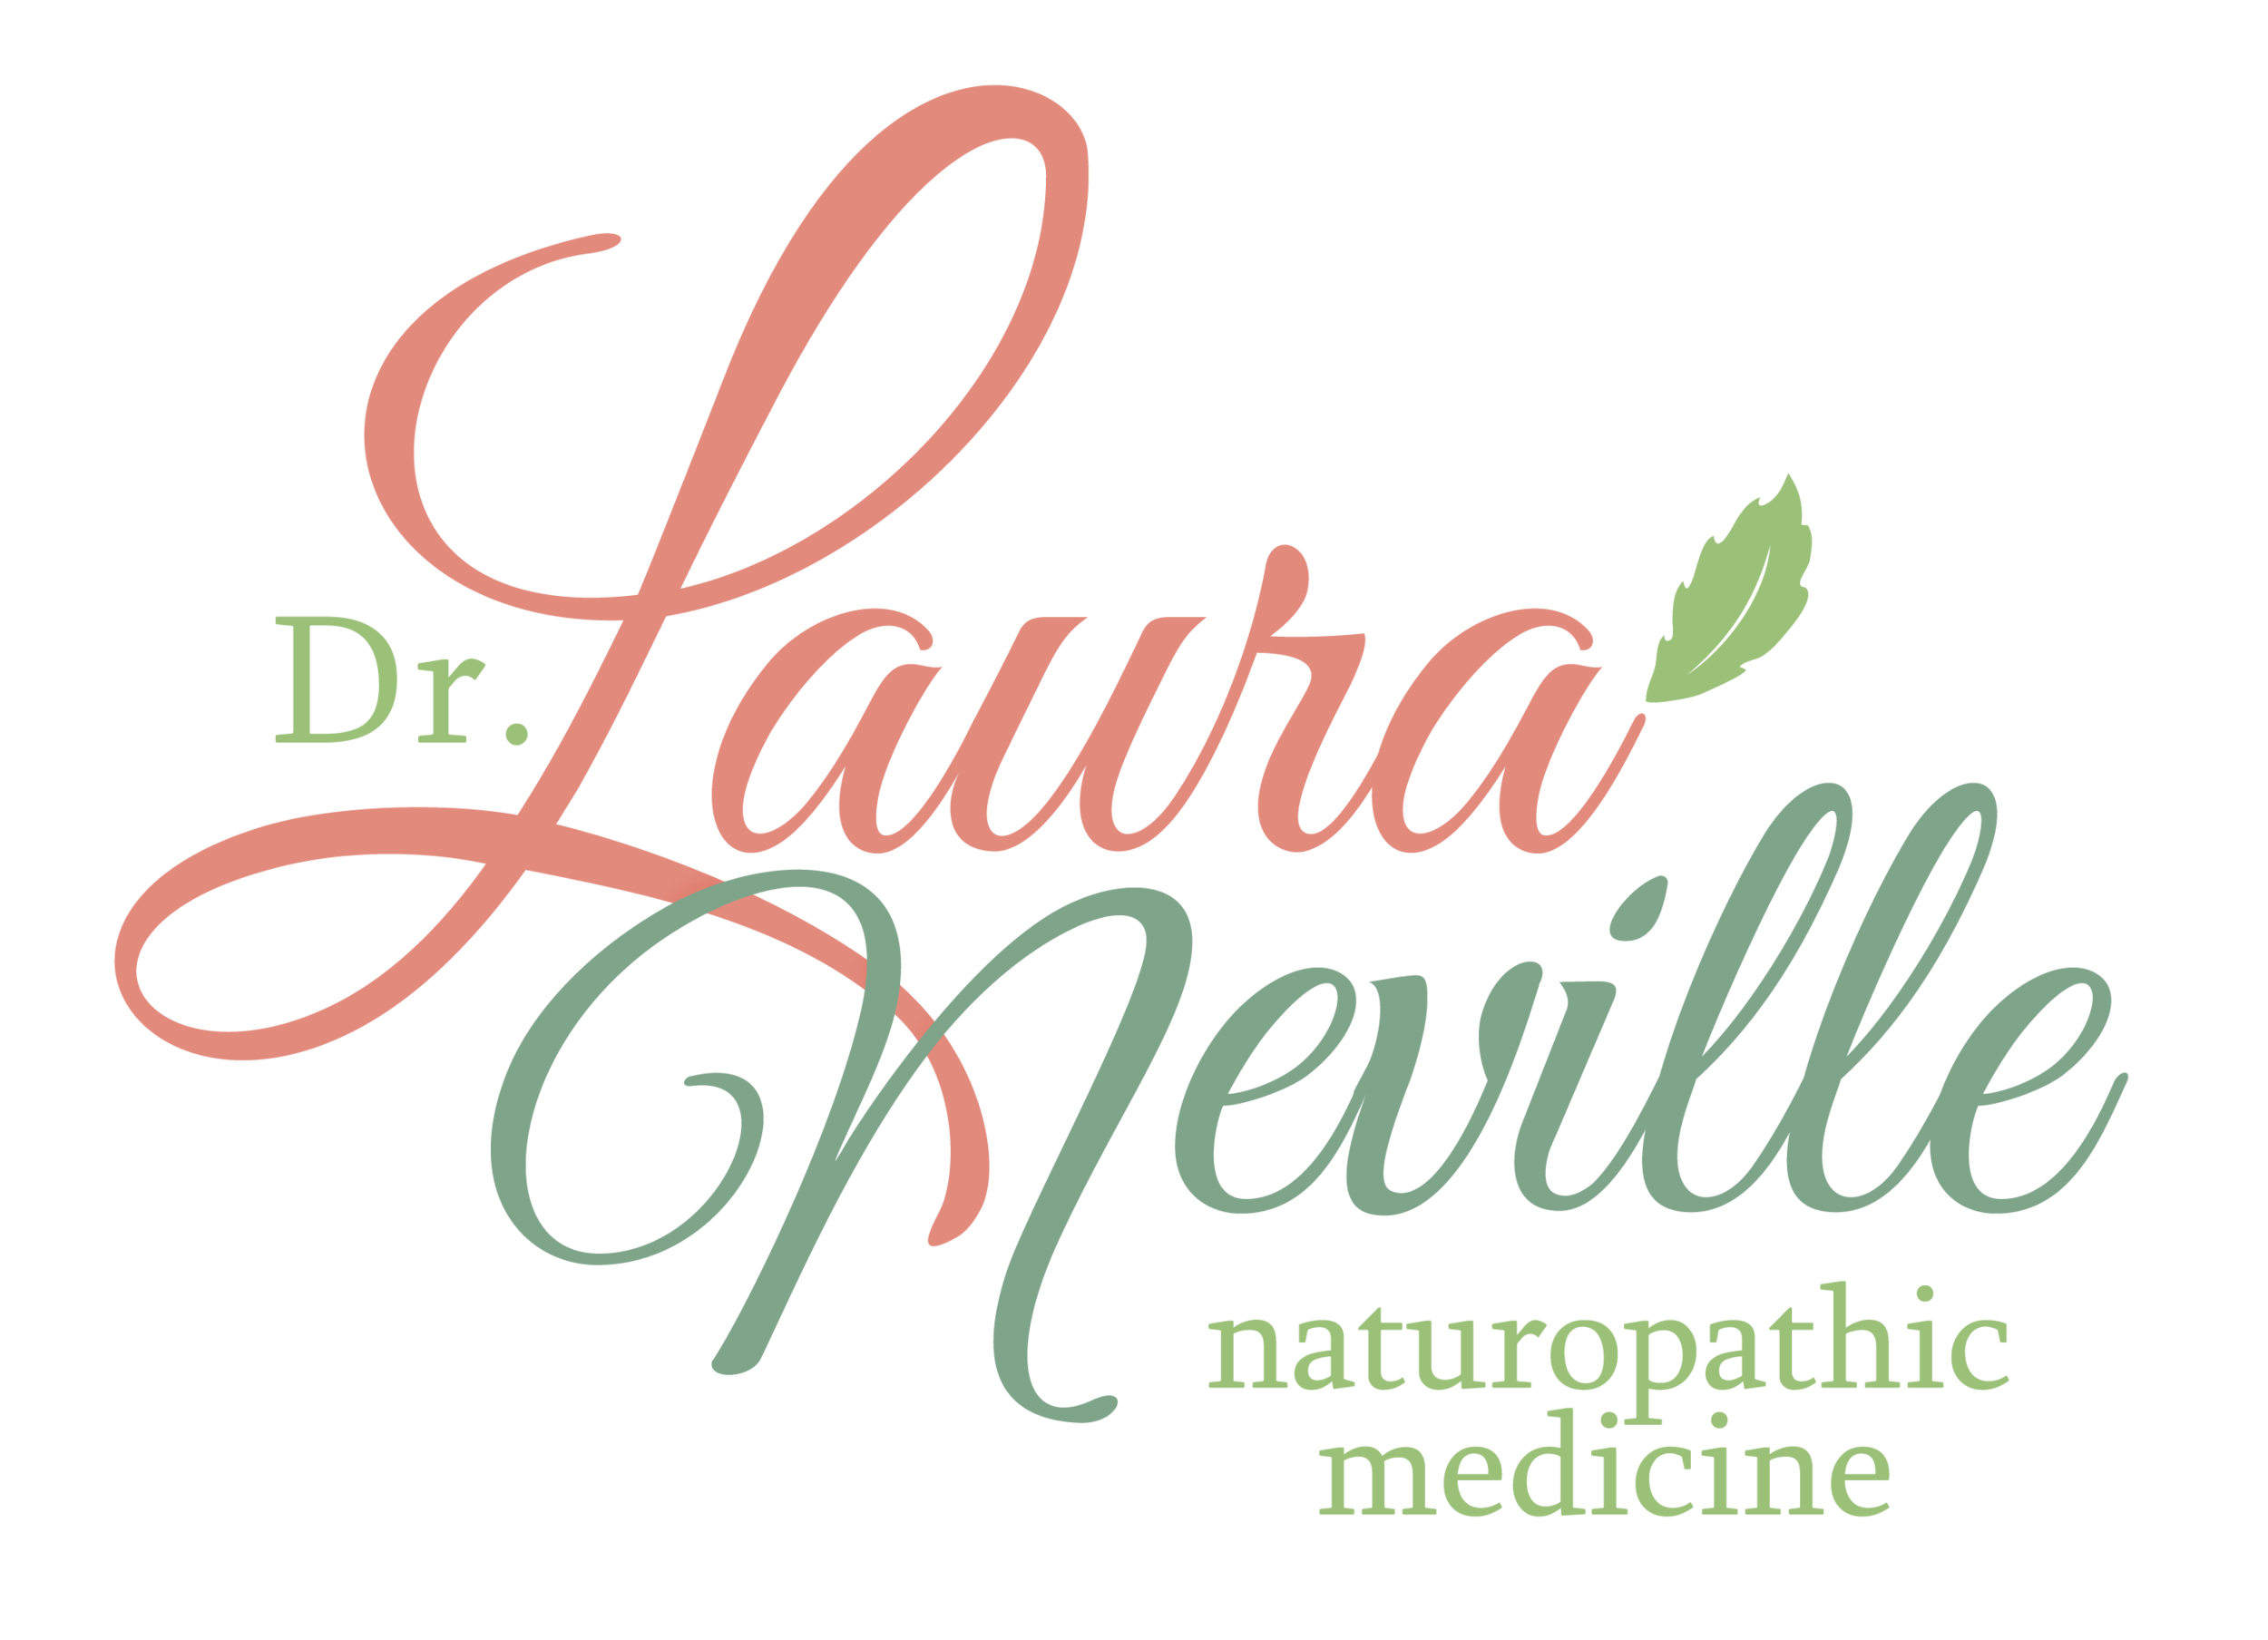 Dr. Laura Neville